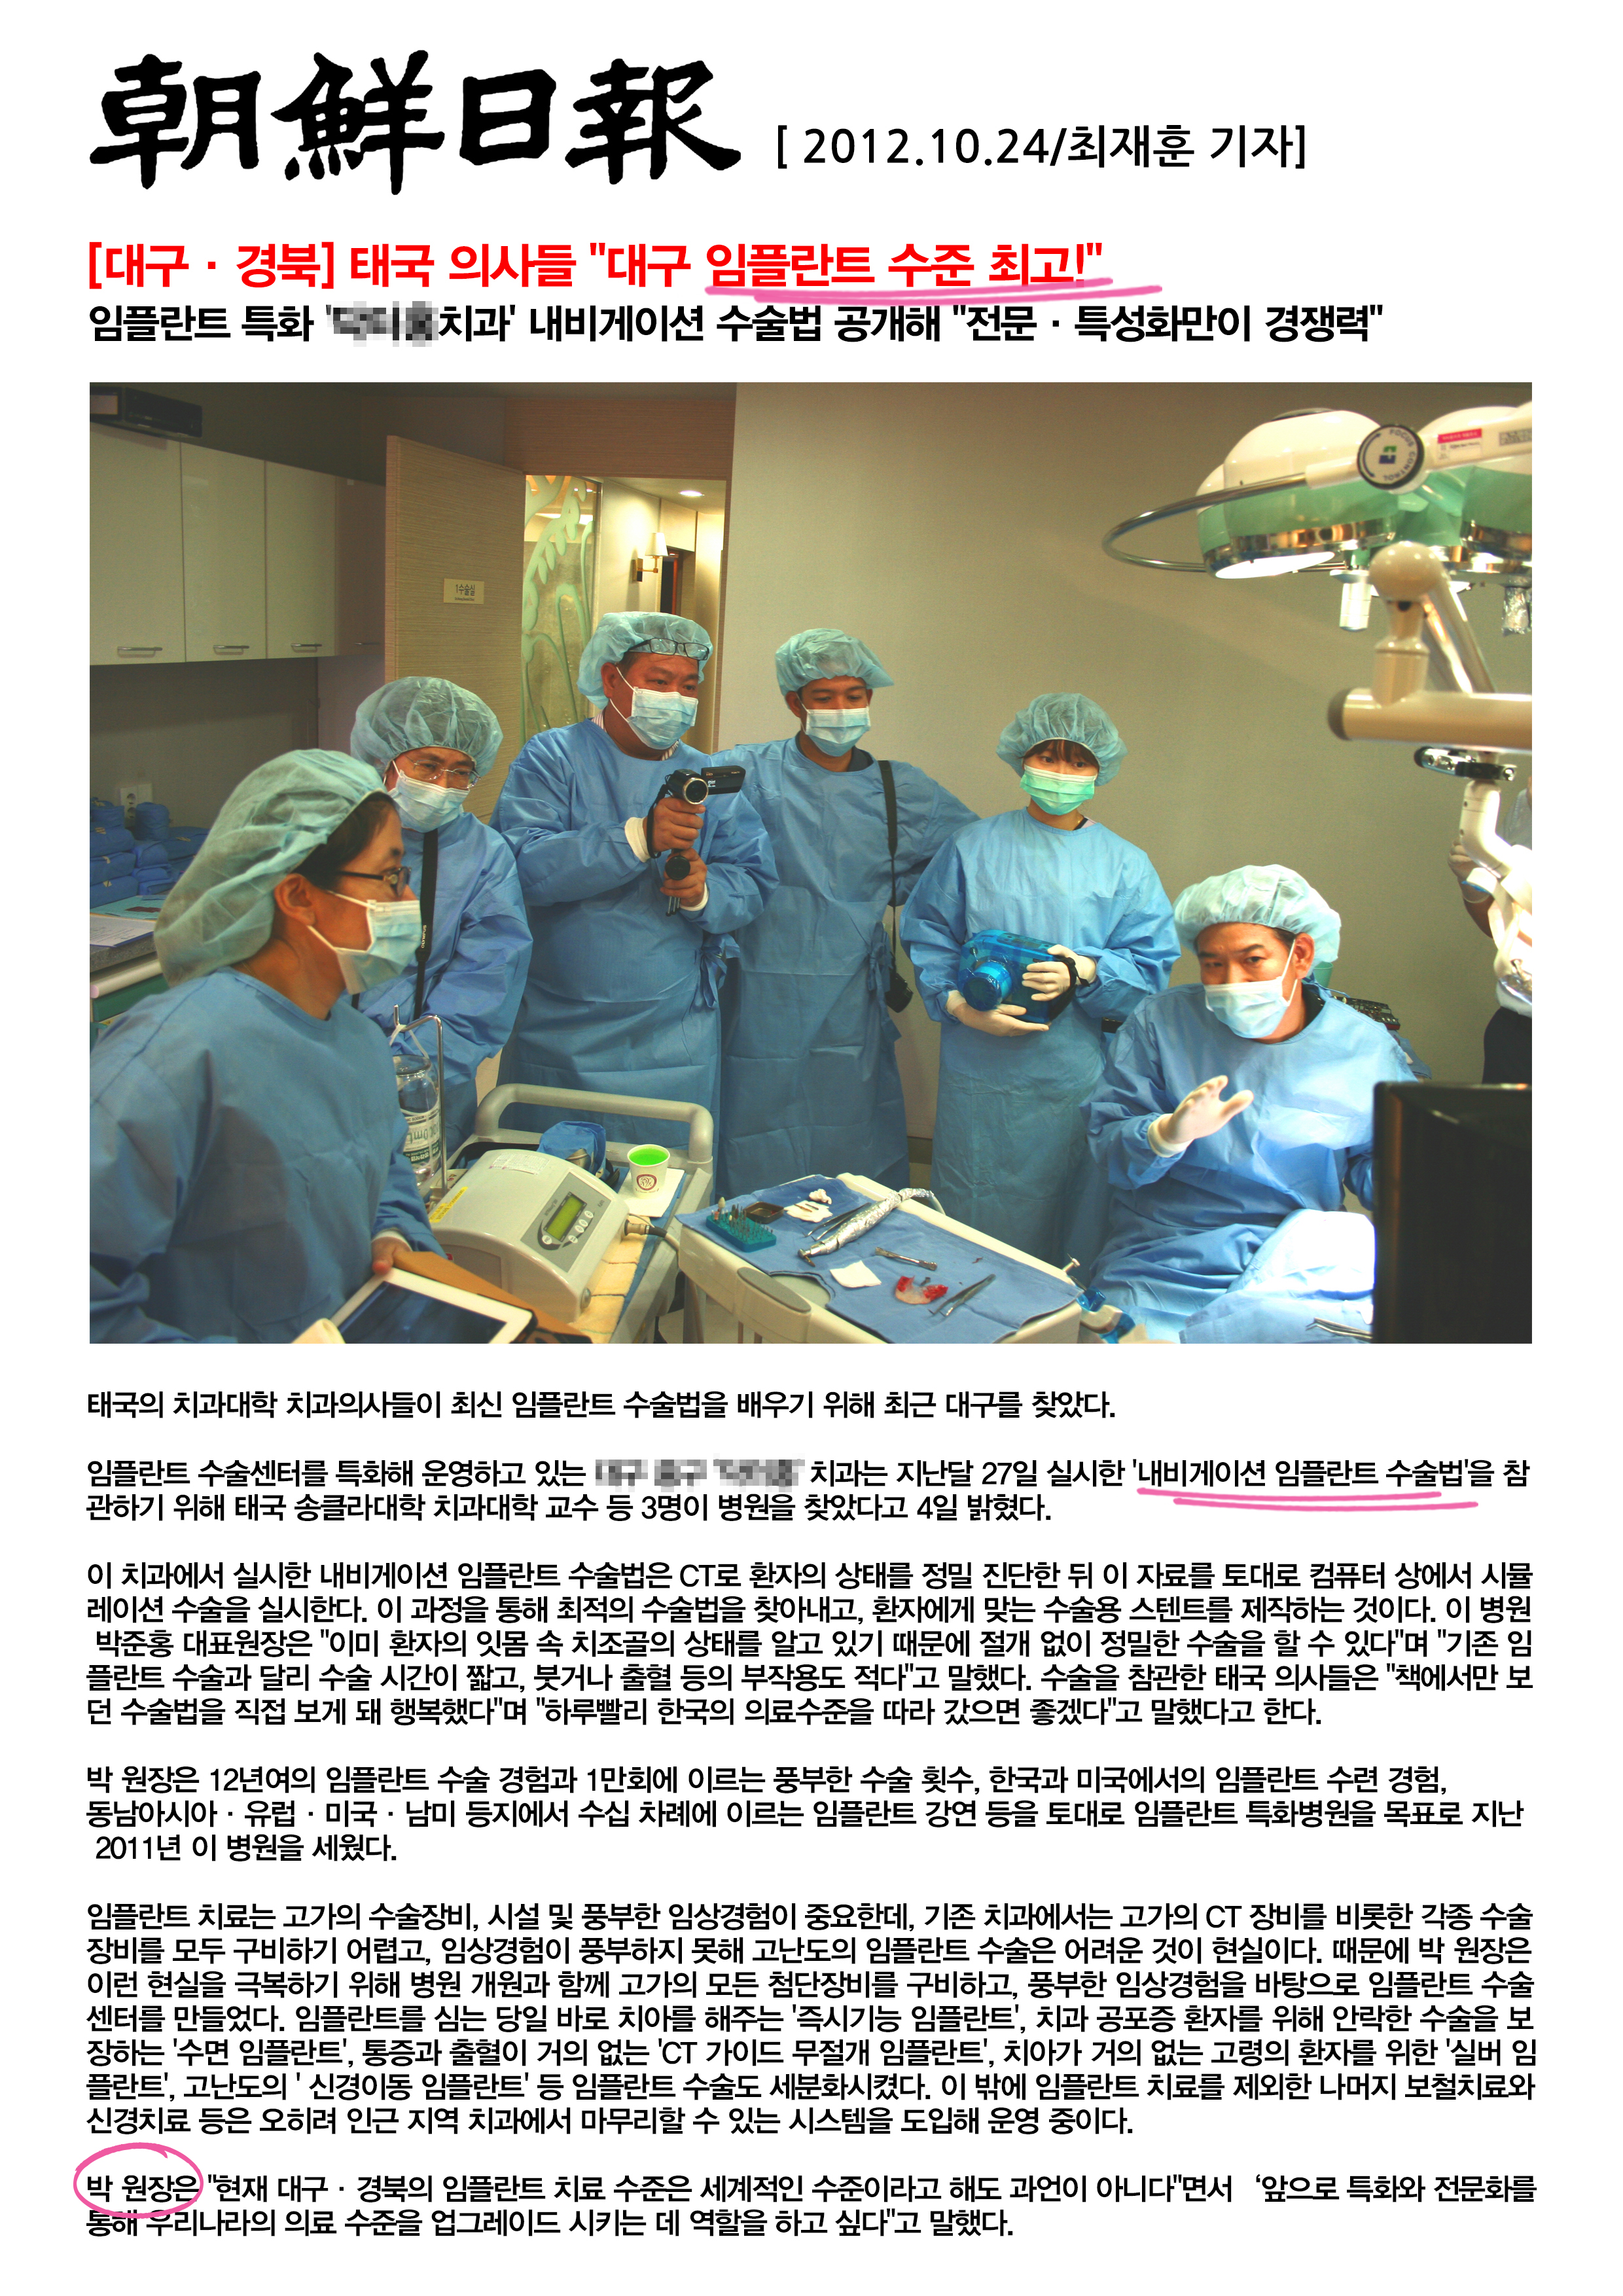 live surgery news